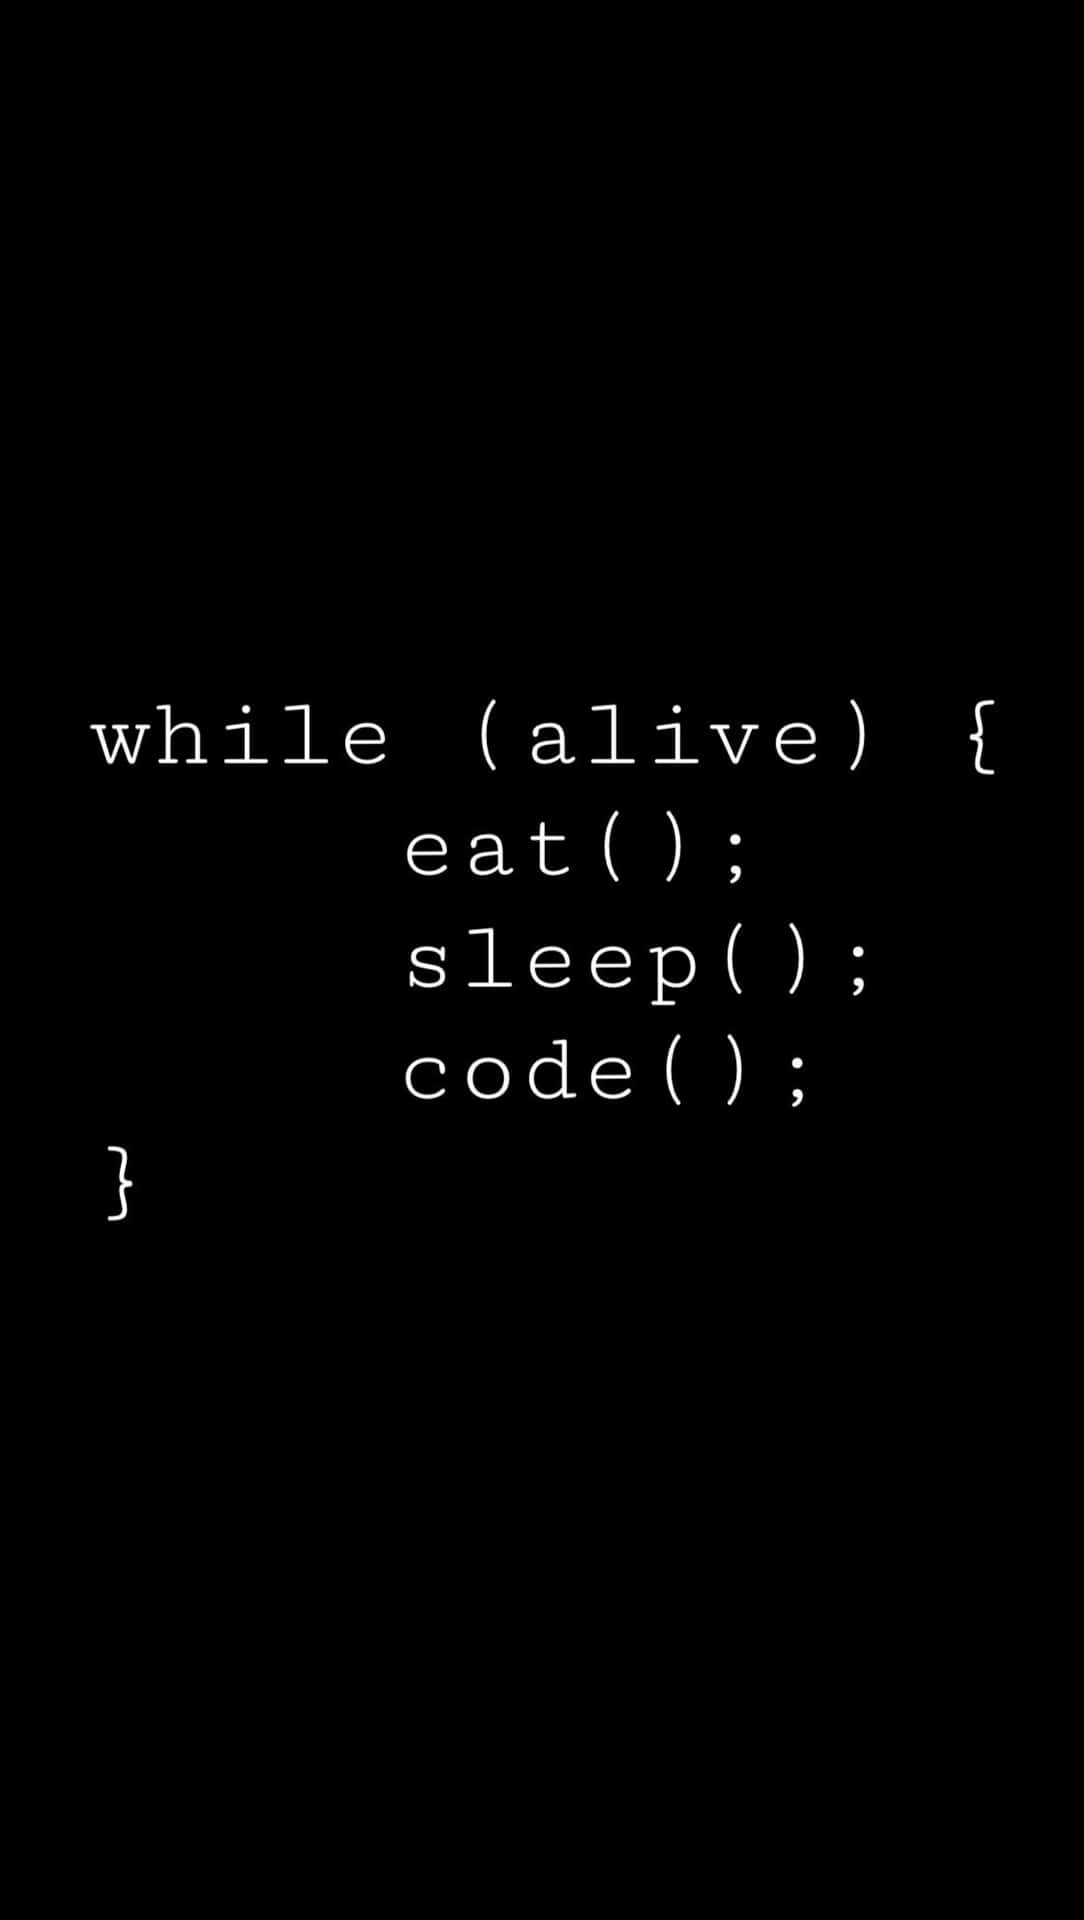 Funny Coding Alive Wallpaper